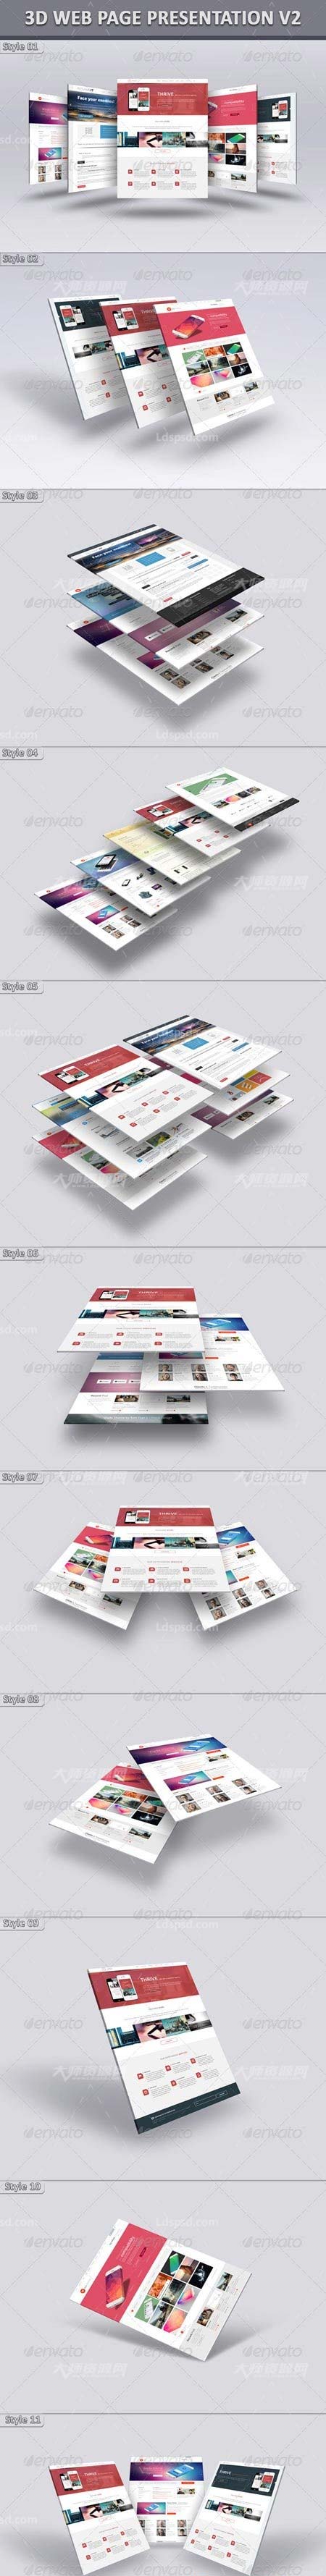 3D Web Page Presentation V2,11个网站页面3D展示模型(第二套)